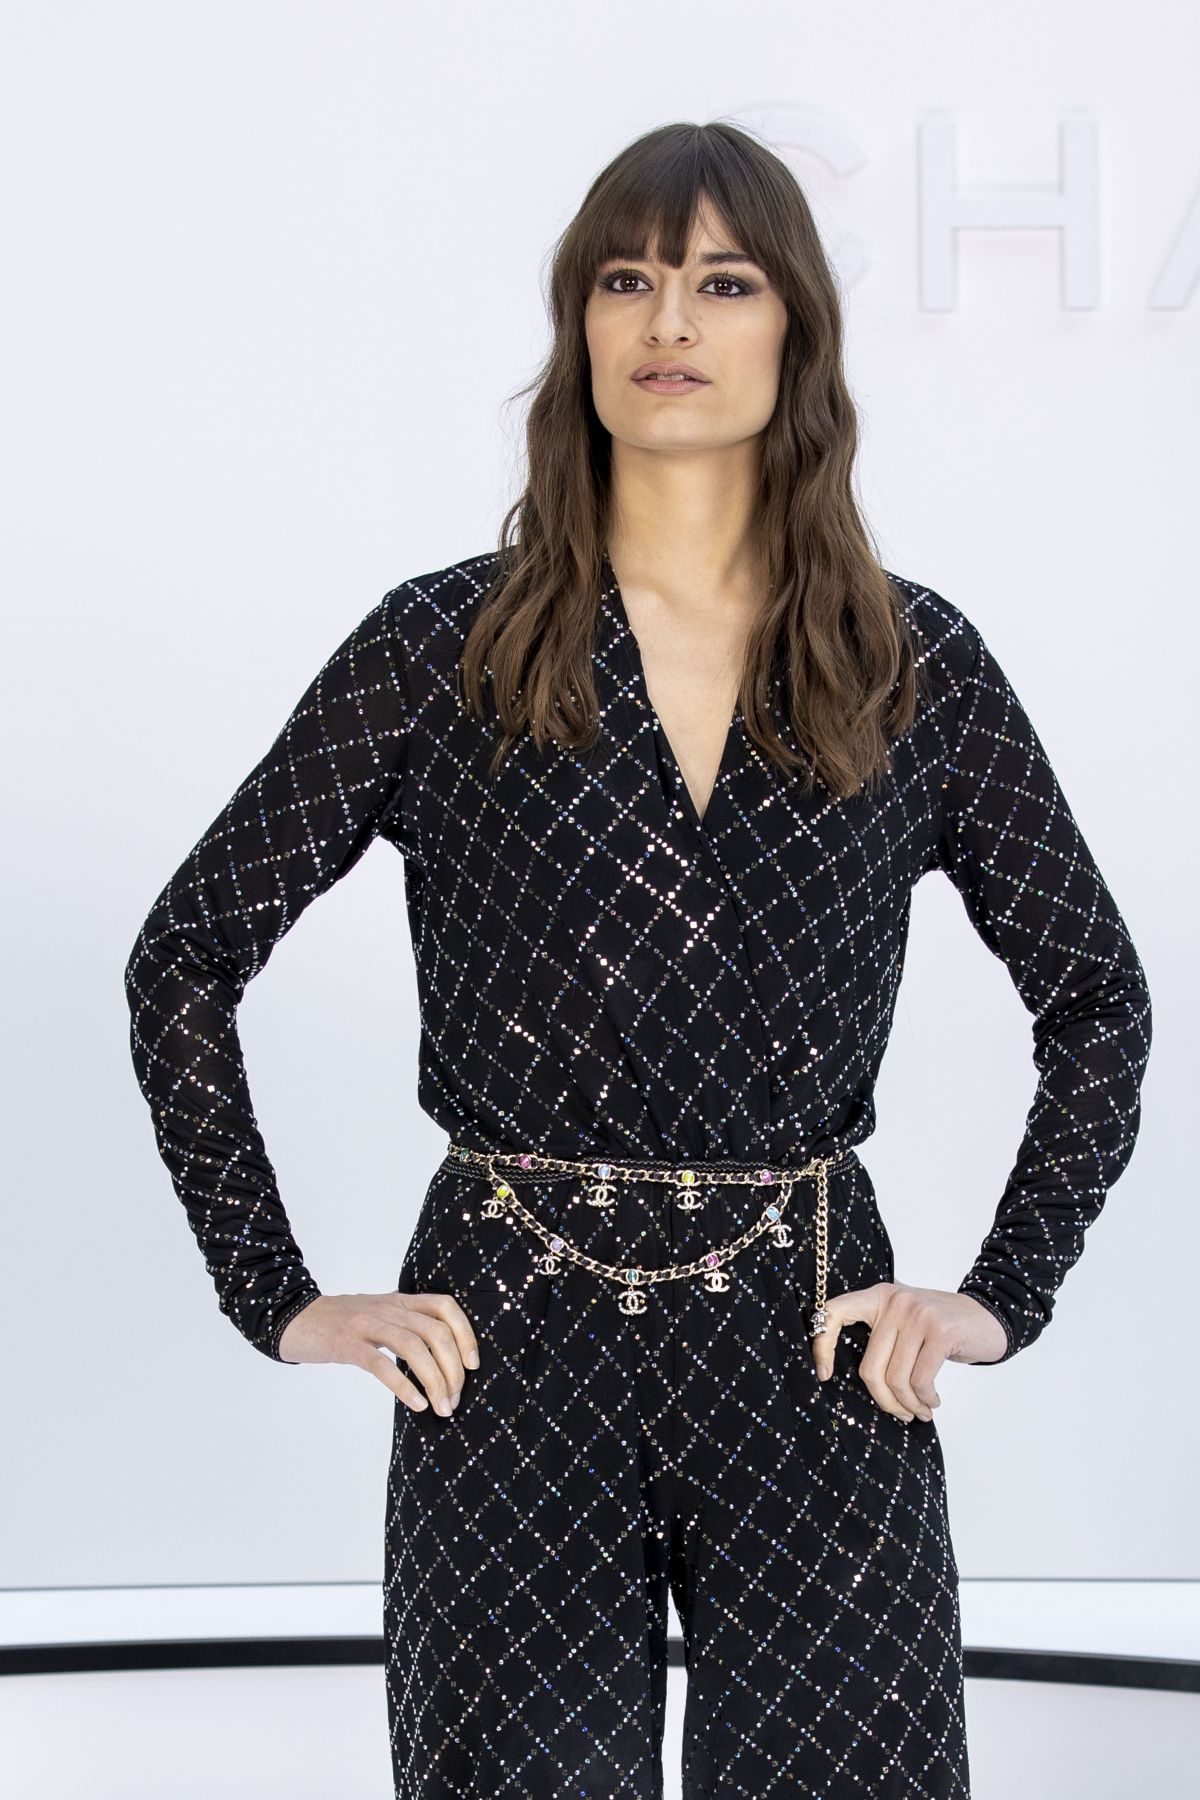 CLARA LUCIANI at Chanel Show at Paris Fashion Week 03/03/2020 – HawtCelebs